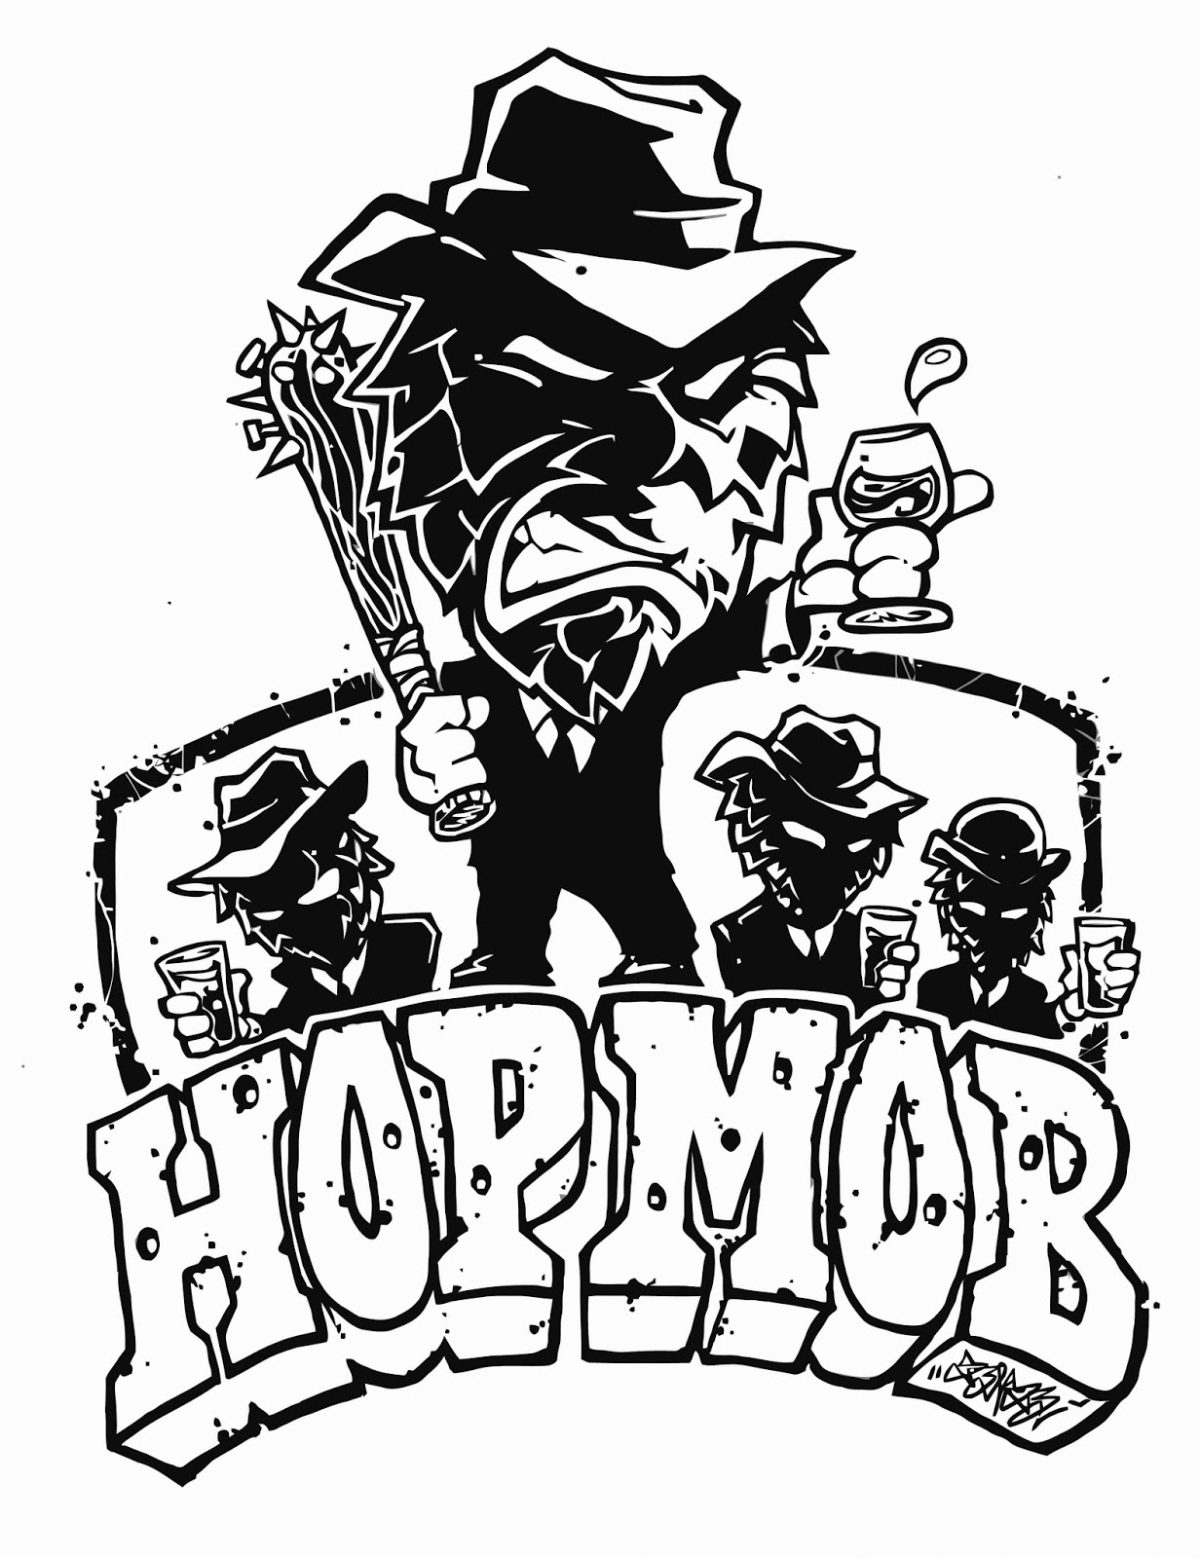 Thursday, February 7th @3pm 5th Annual Hob Mob Triple Ipa Kickoff Party